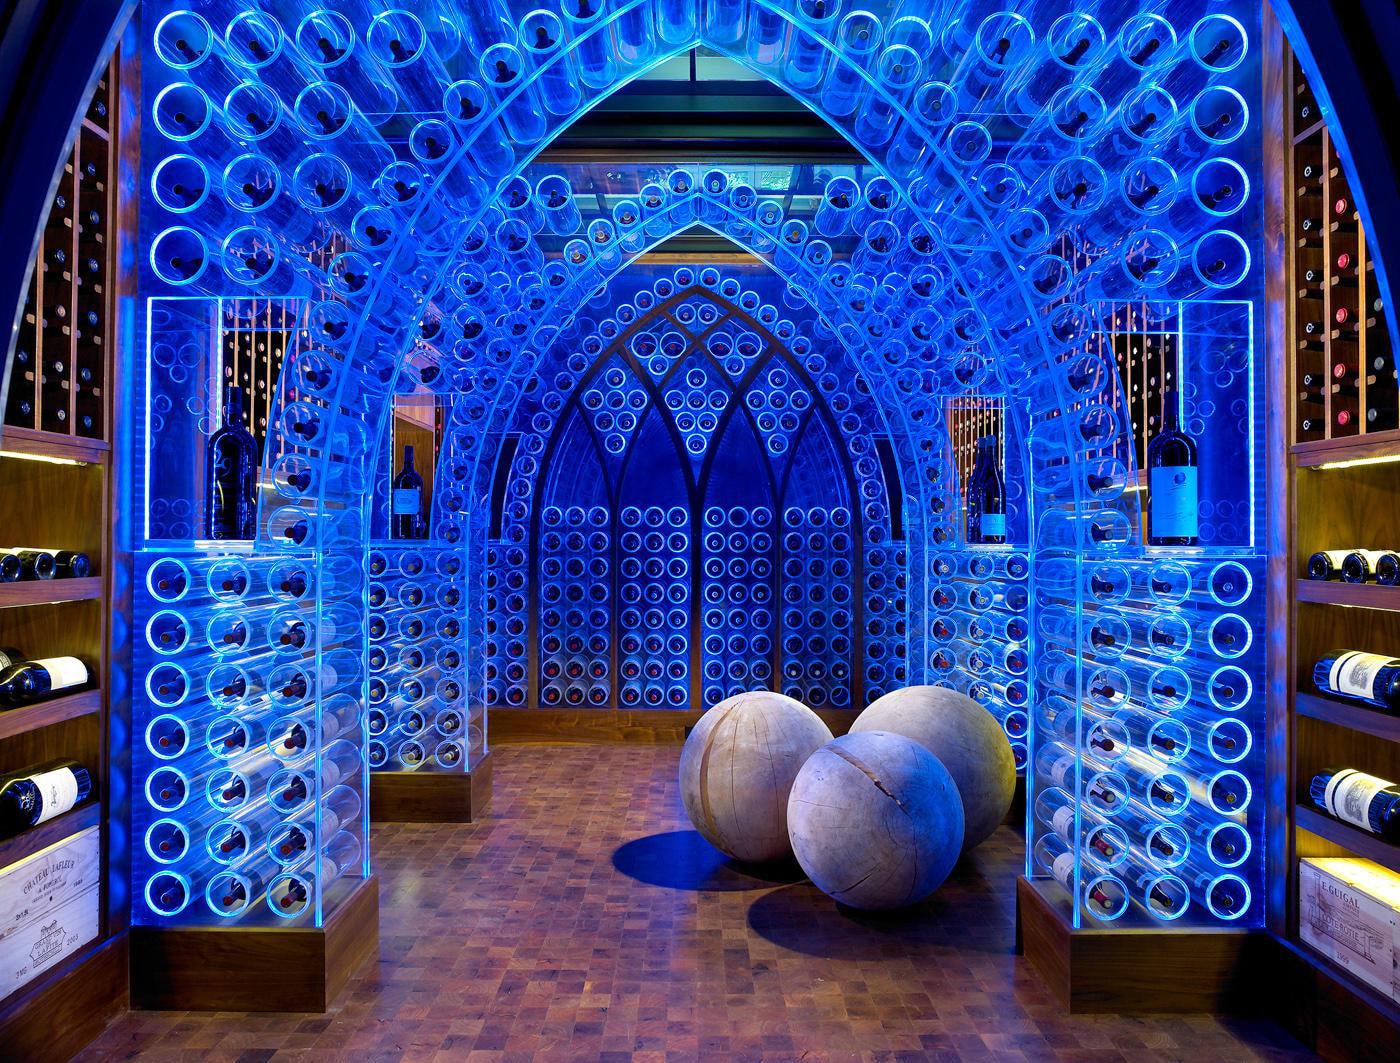 The Most Inspiring Wine Cellar Design Ever